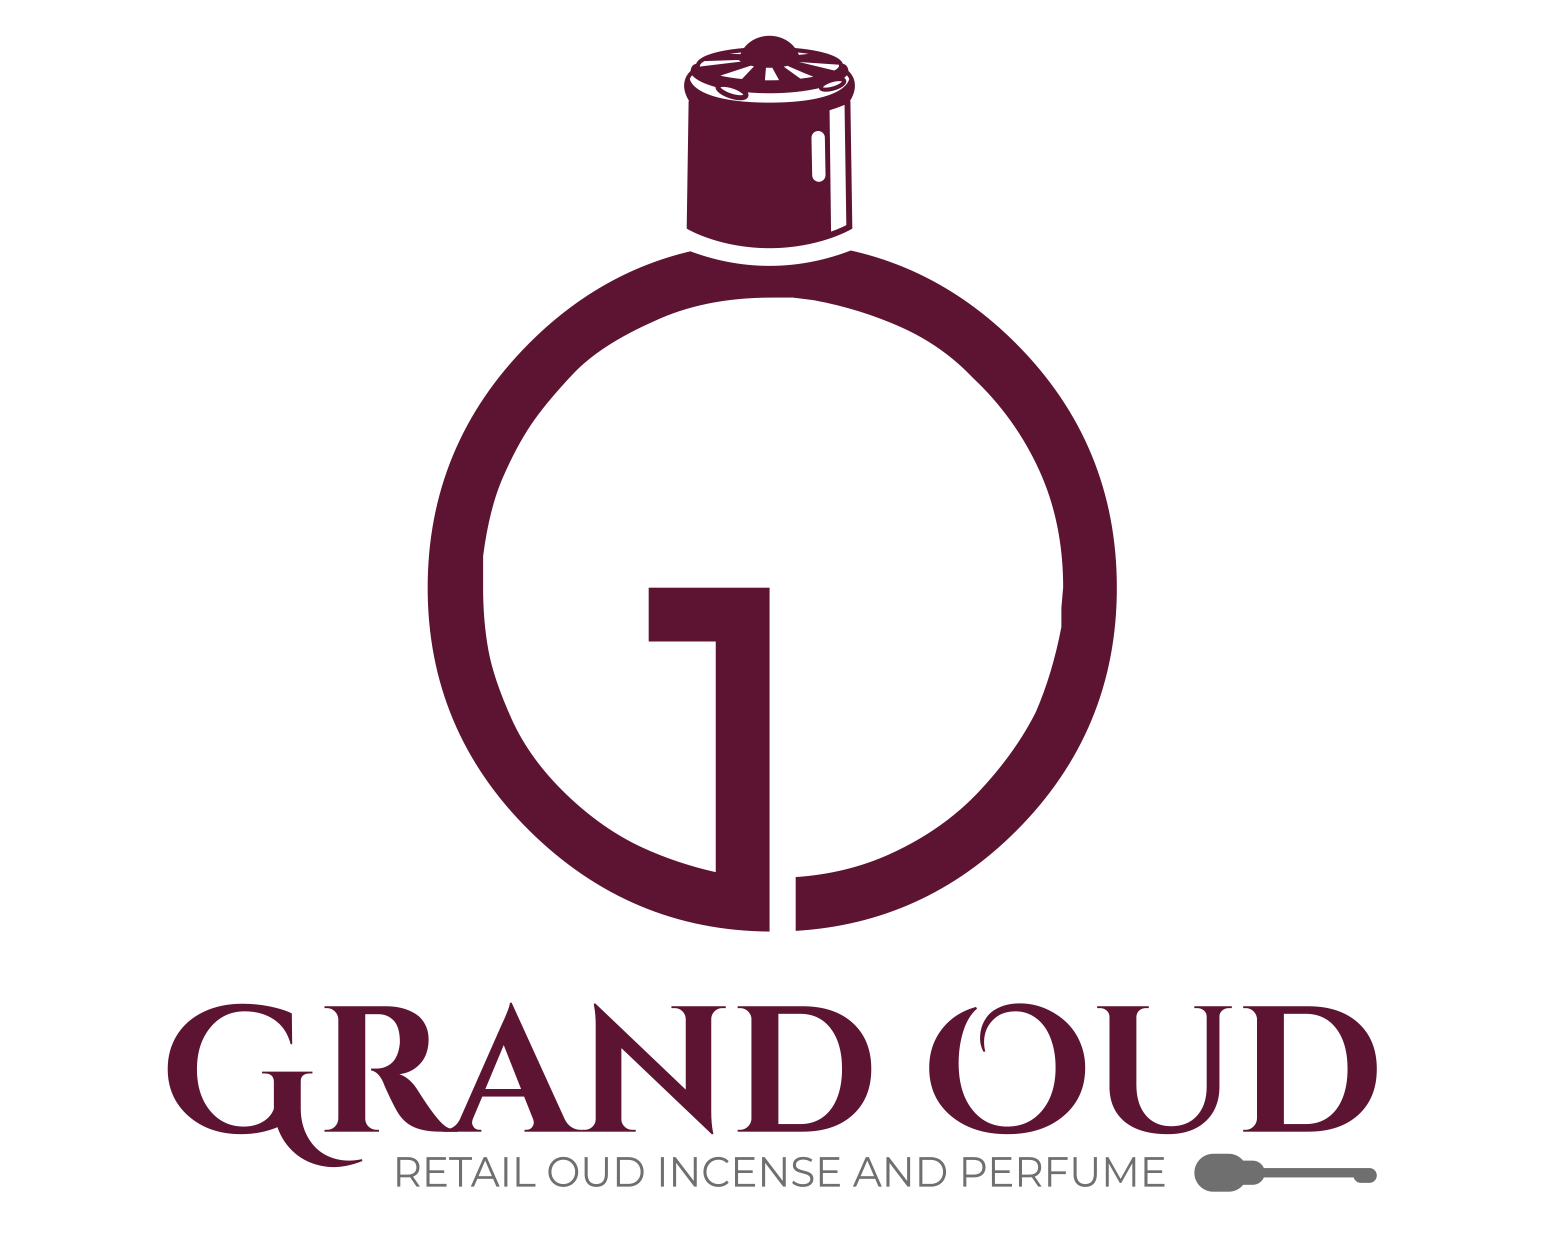 Oud Grand